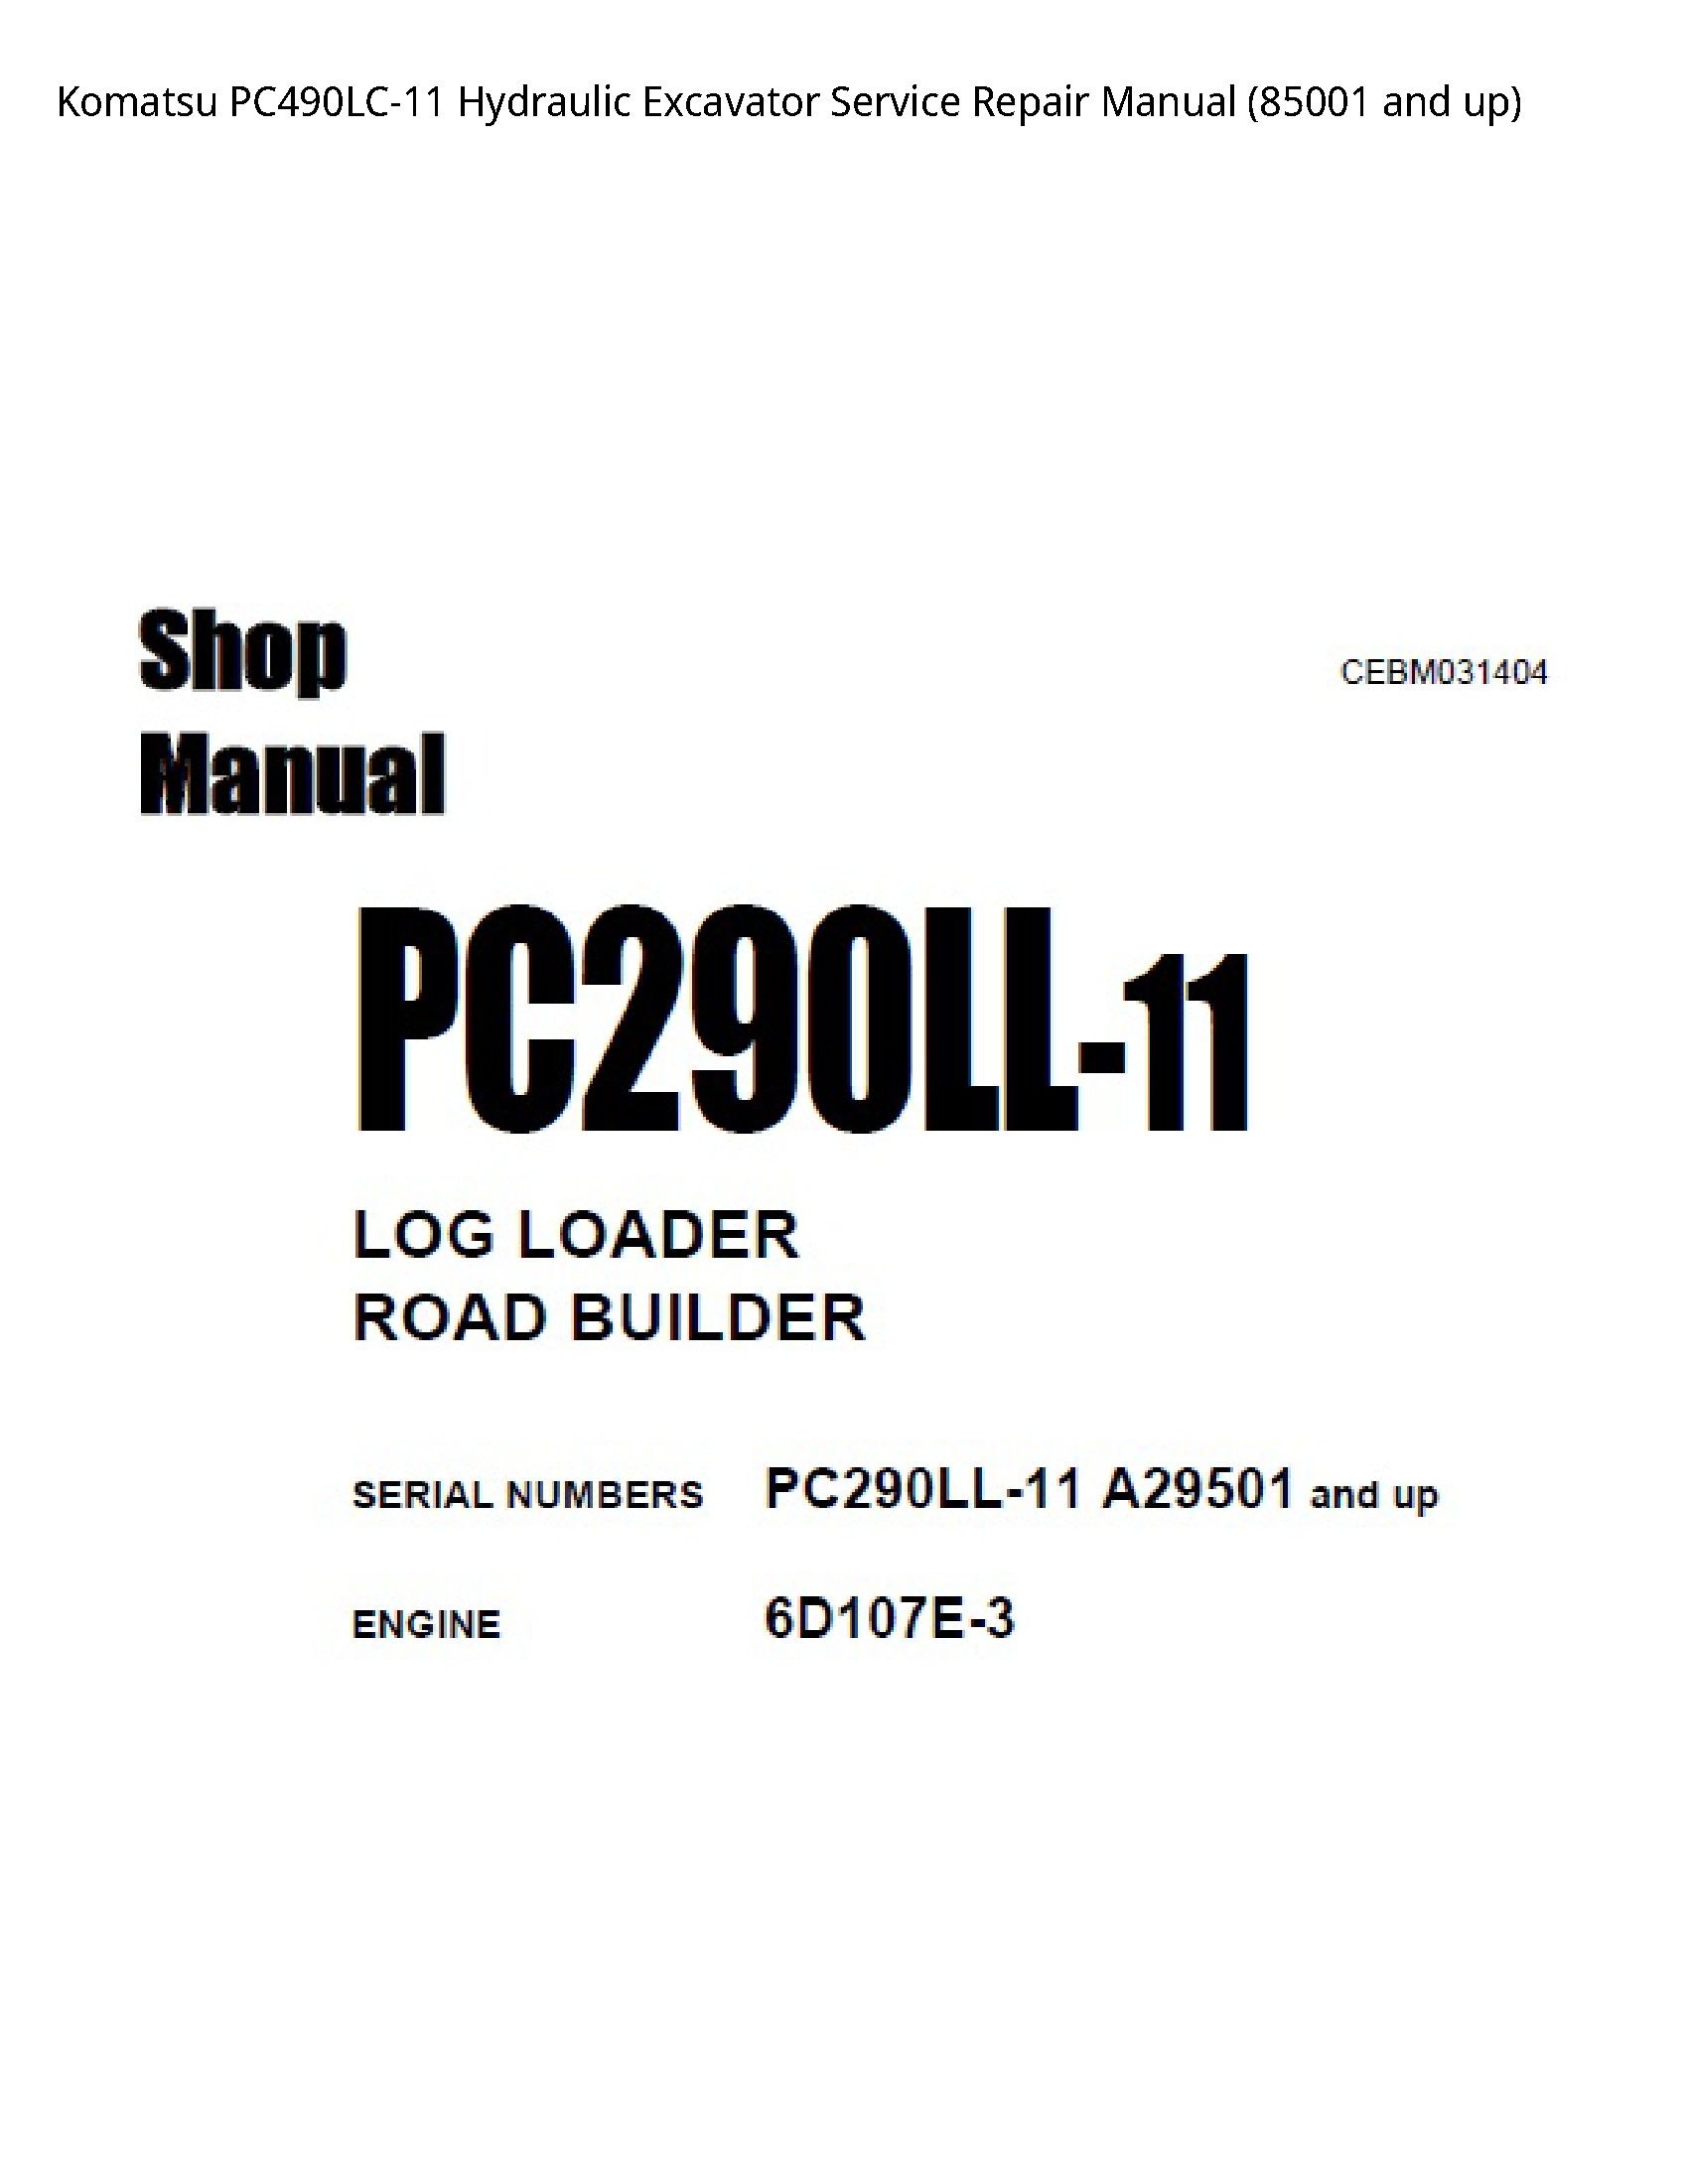 KOMATSU PC490LC-11 Hydraulic Excavator manual